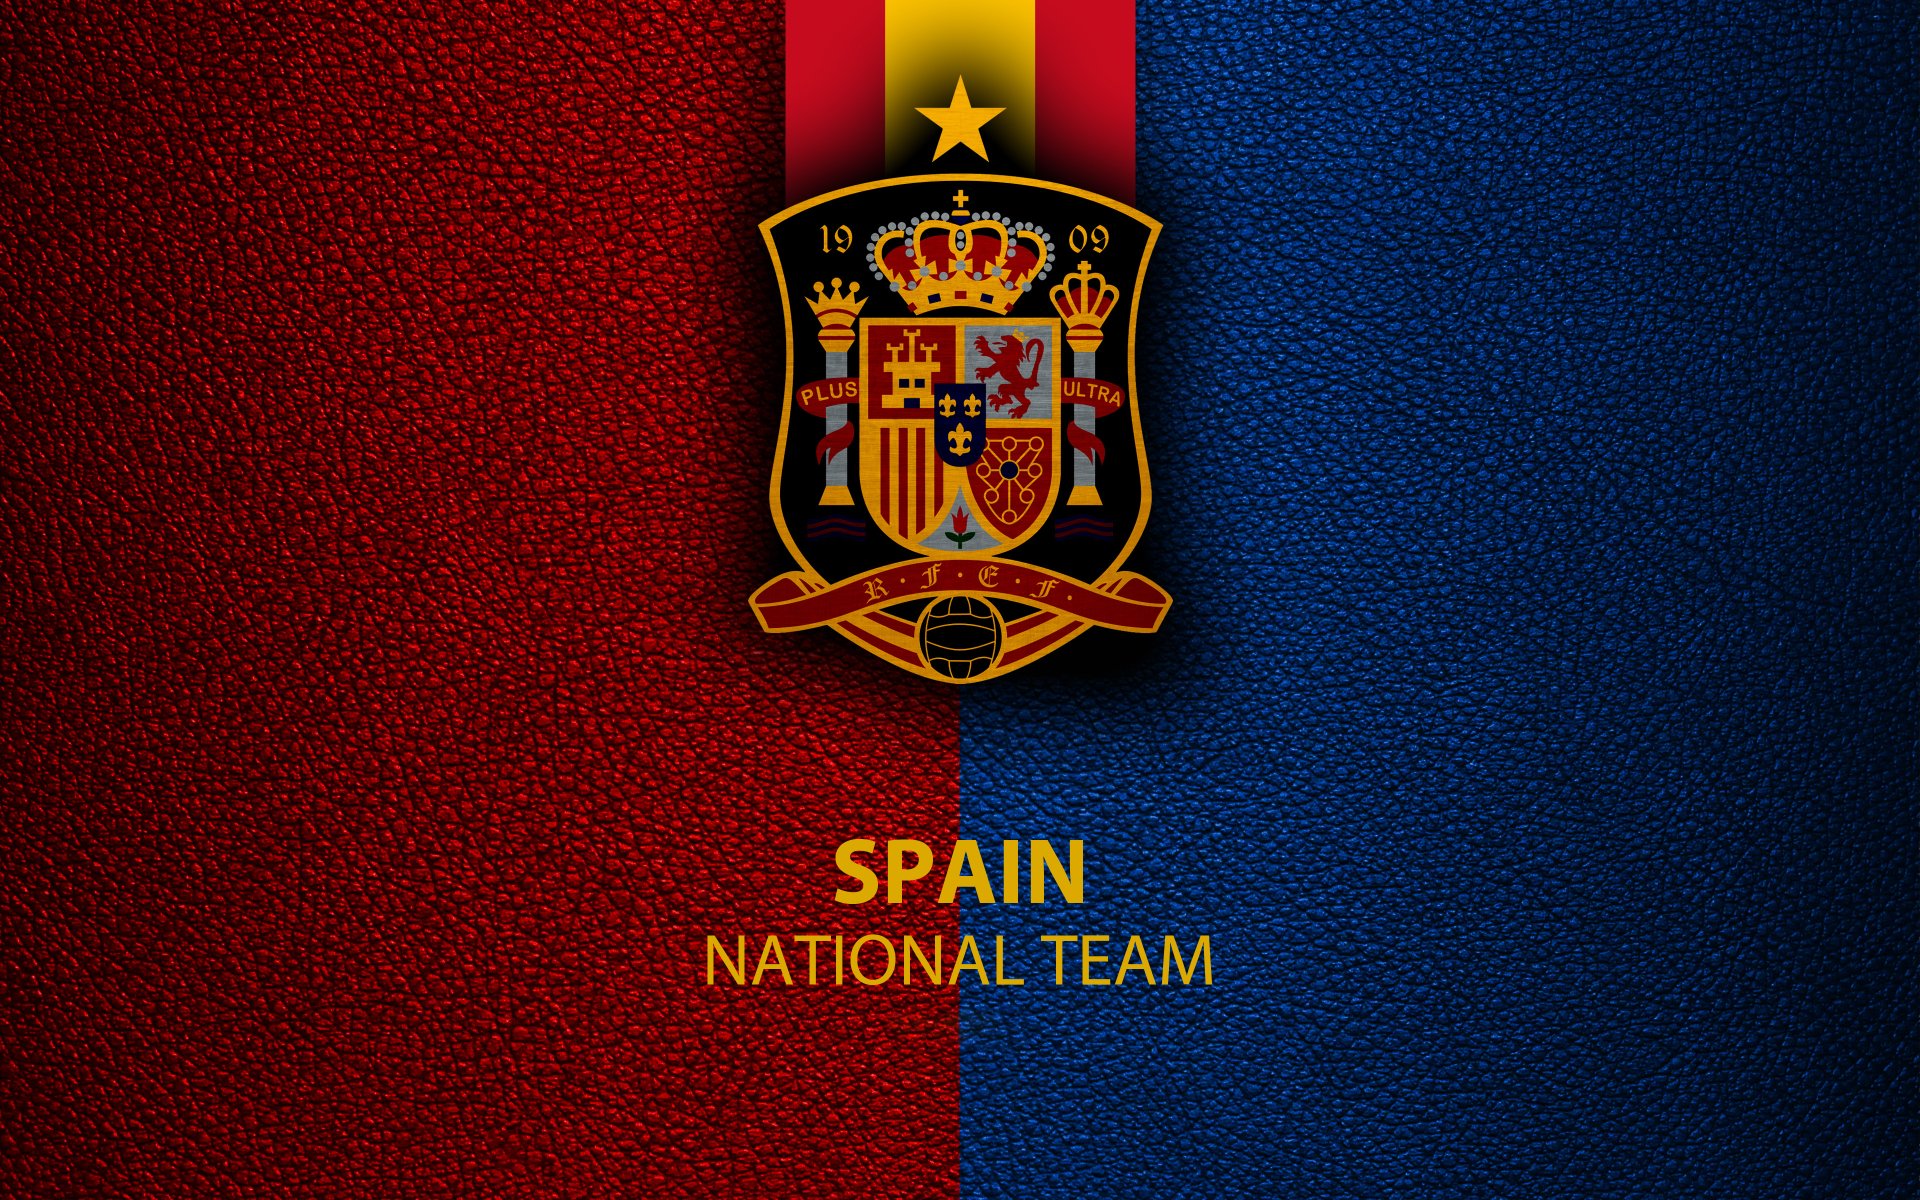 Spain National Football Team 4k Ultra HD Wallpaper - Background Image ...